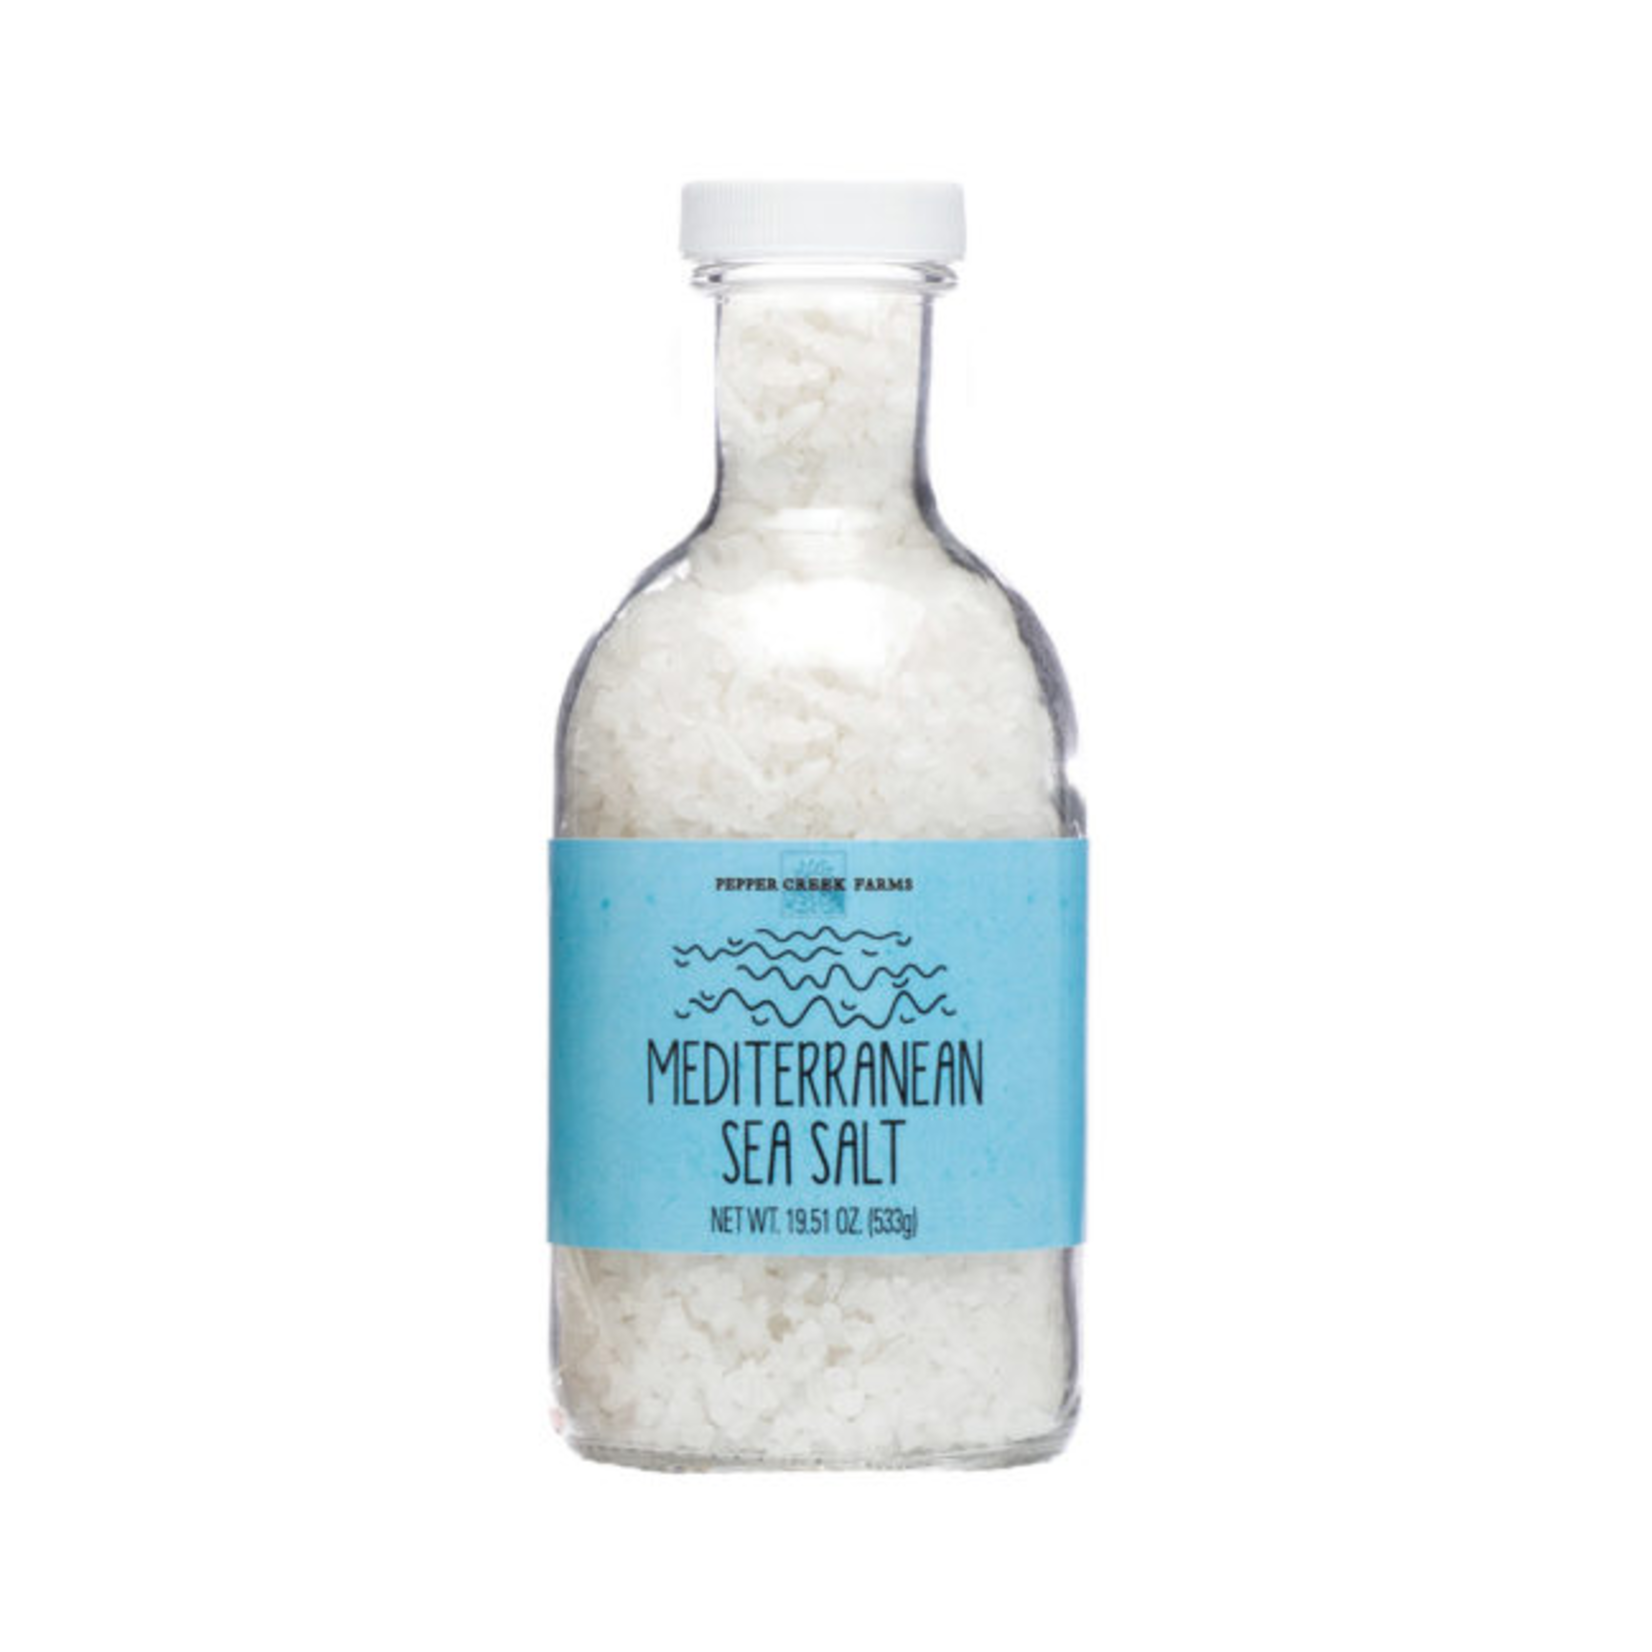 Pepper Creek Farms Mediterranean Sea Salt, 19.5 oz Large Jar